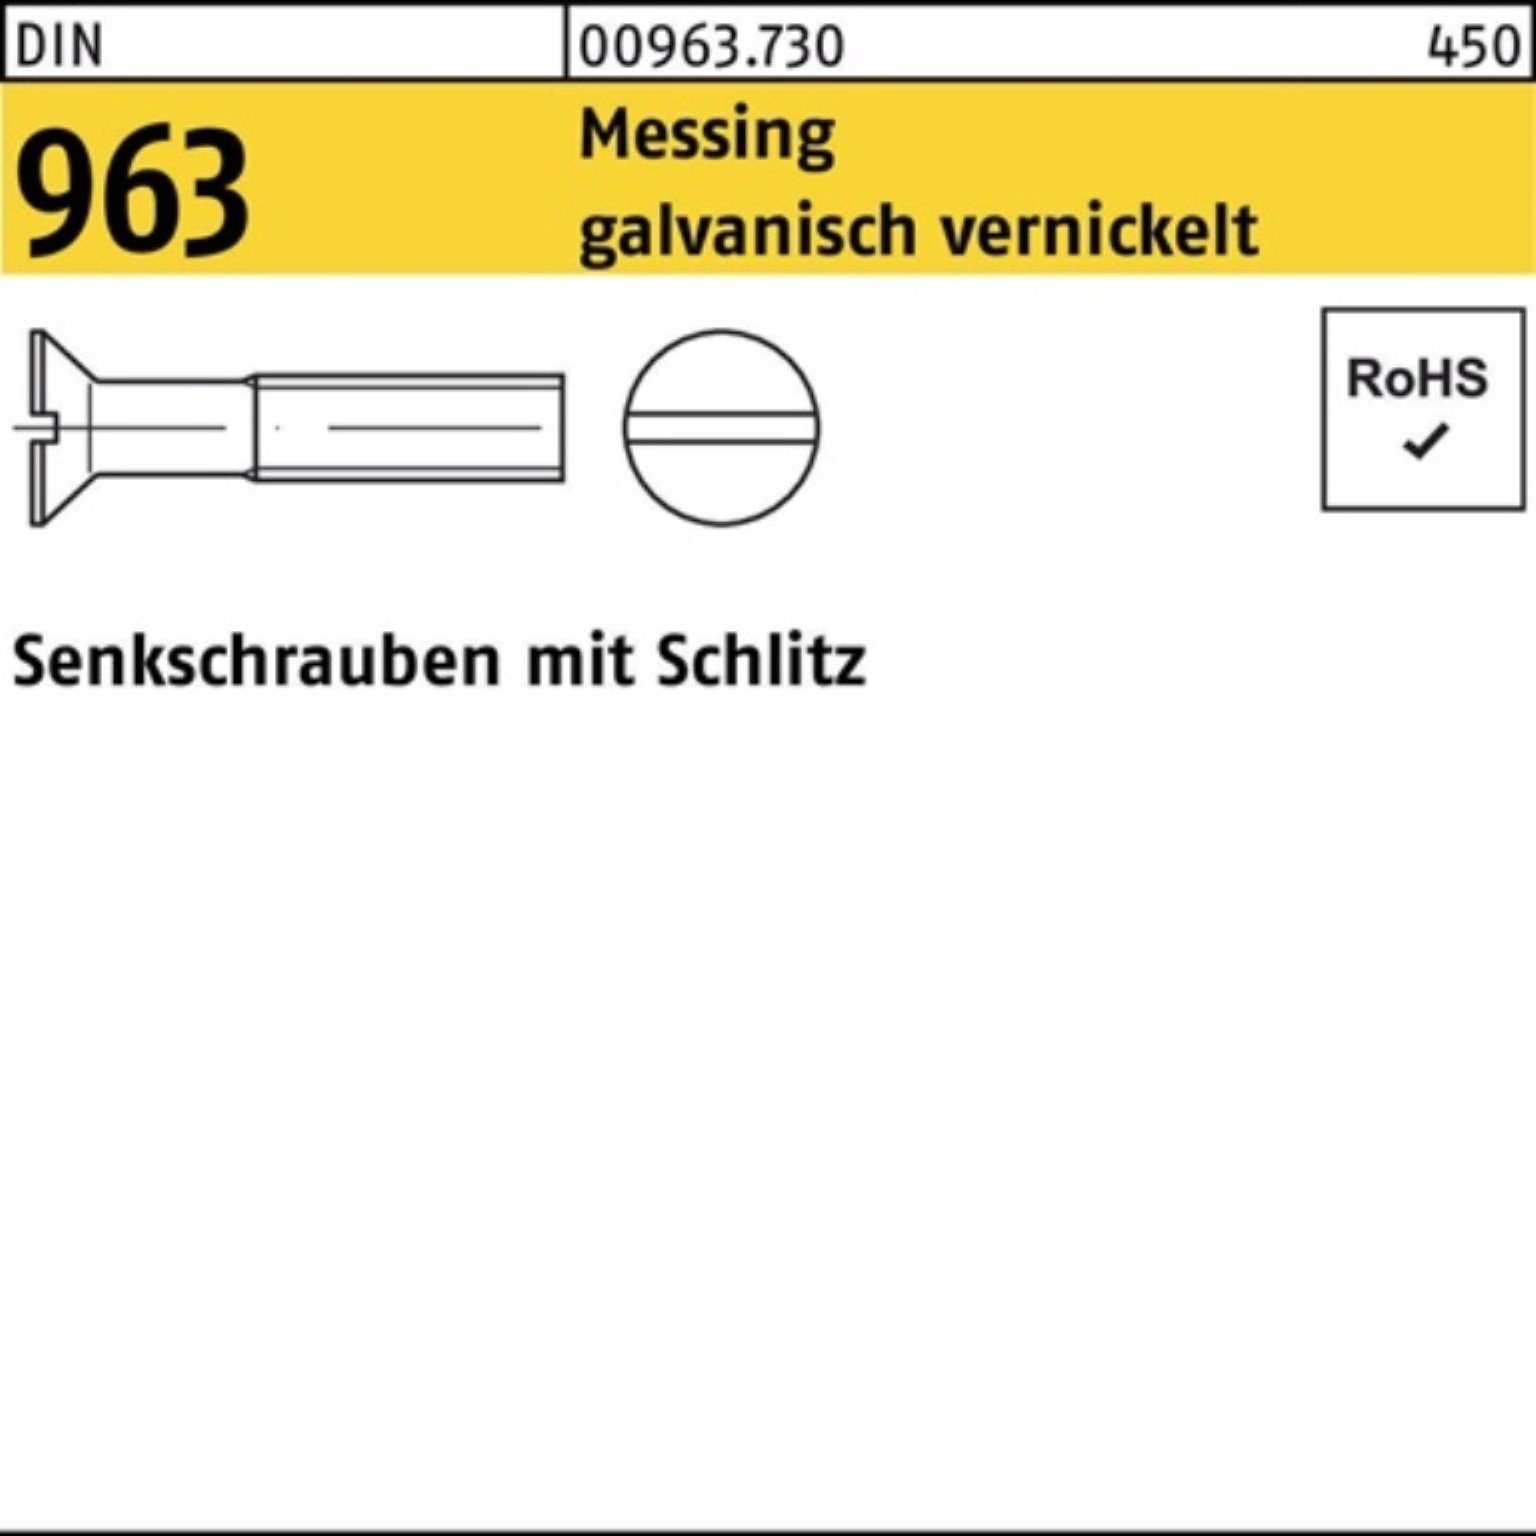 Reyher Senkschraube 200er Pack 10 Senkschraube DIN Schlitz galv. M3x Messing 963 vernickel